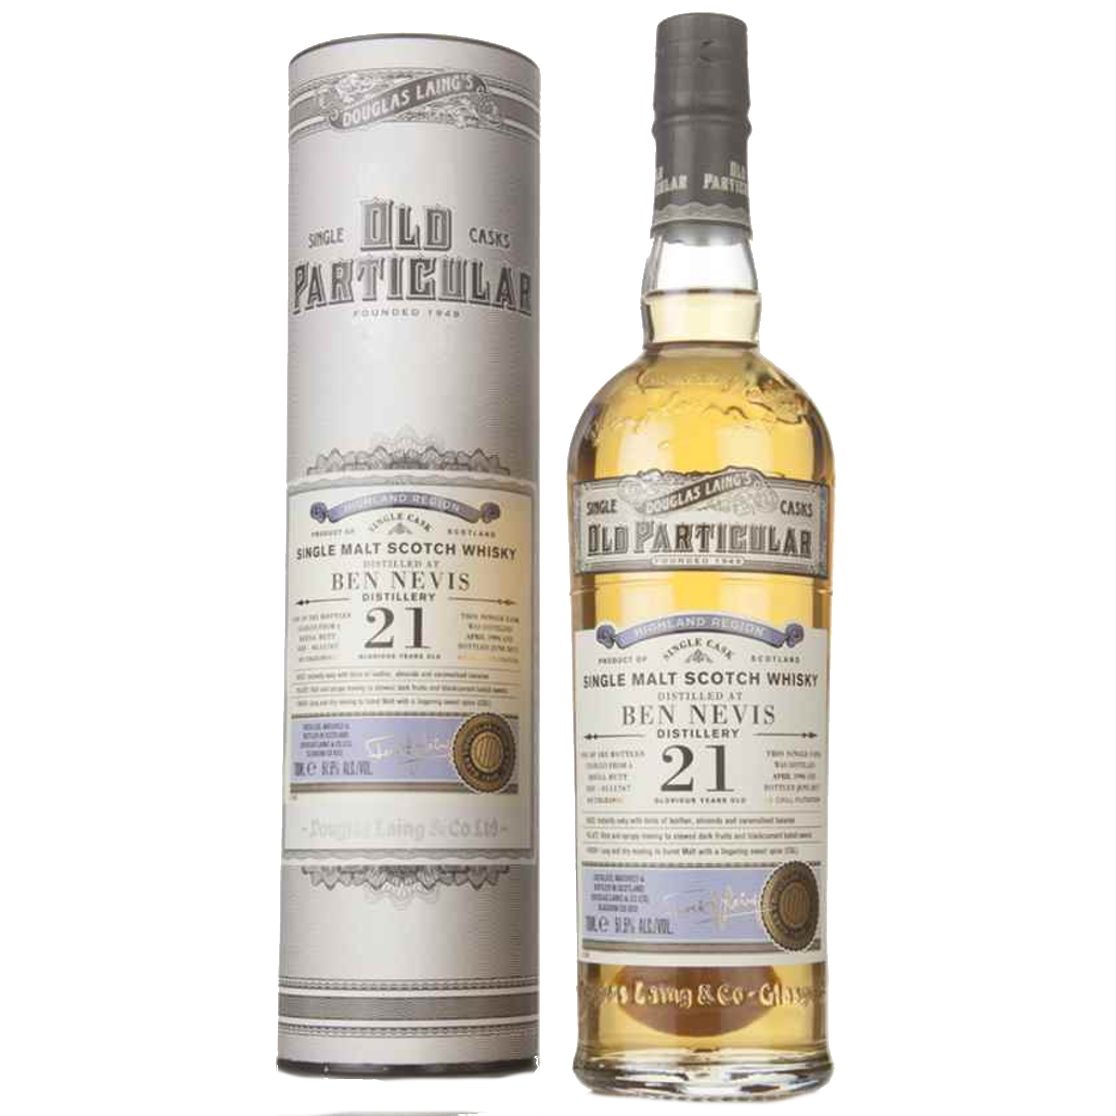 Old Particular Ben Nevis 21 Years Single Cask Single Malt Whisky – Highland Scotland